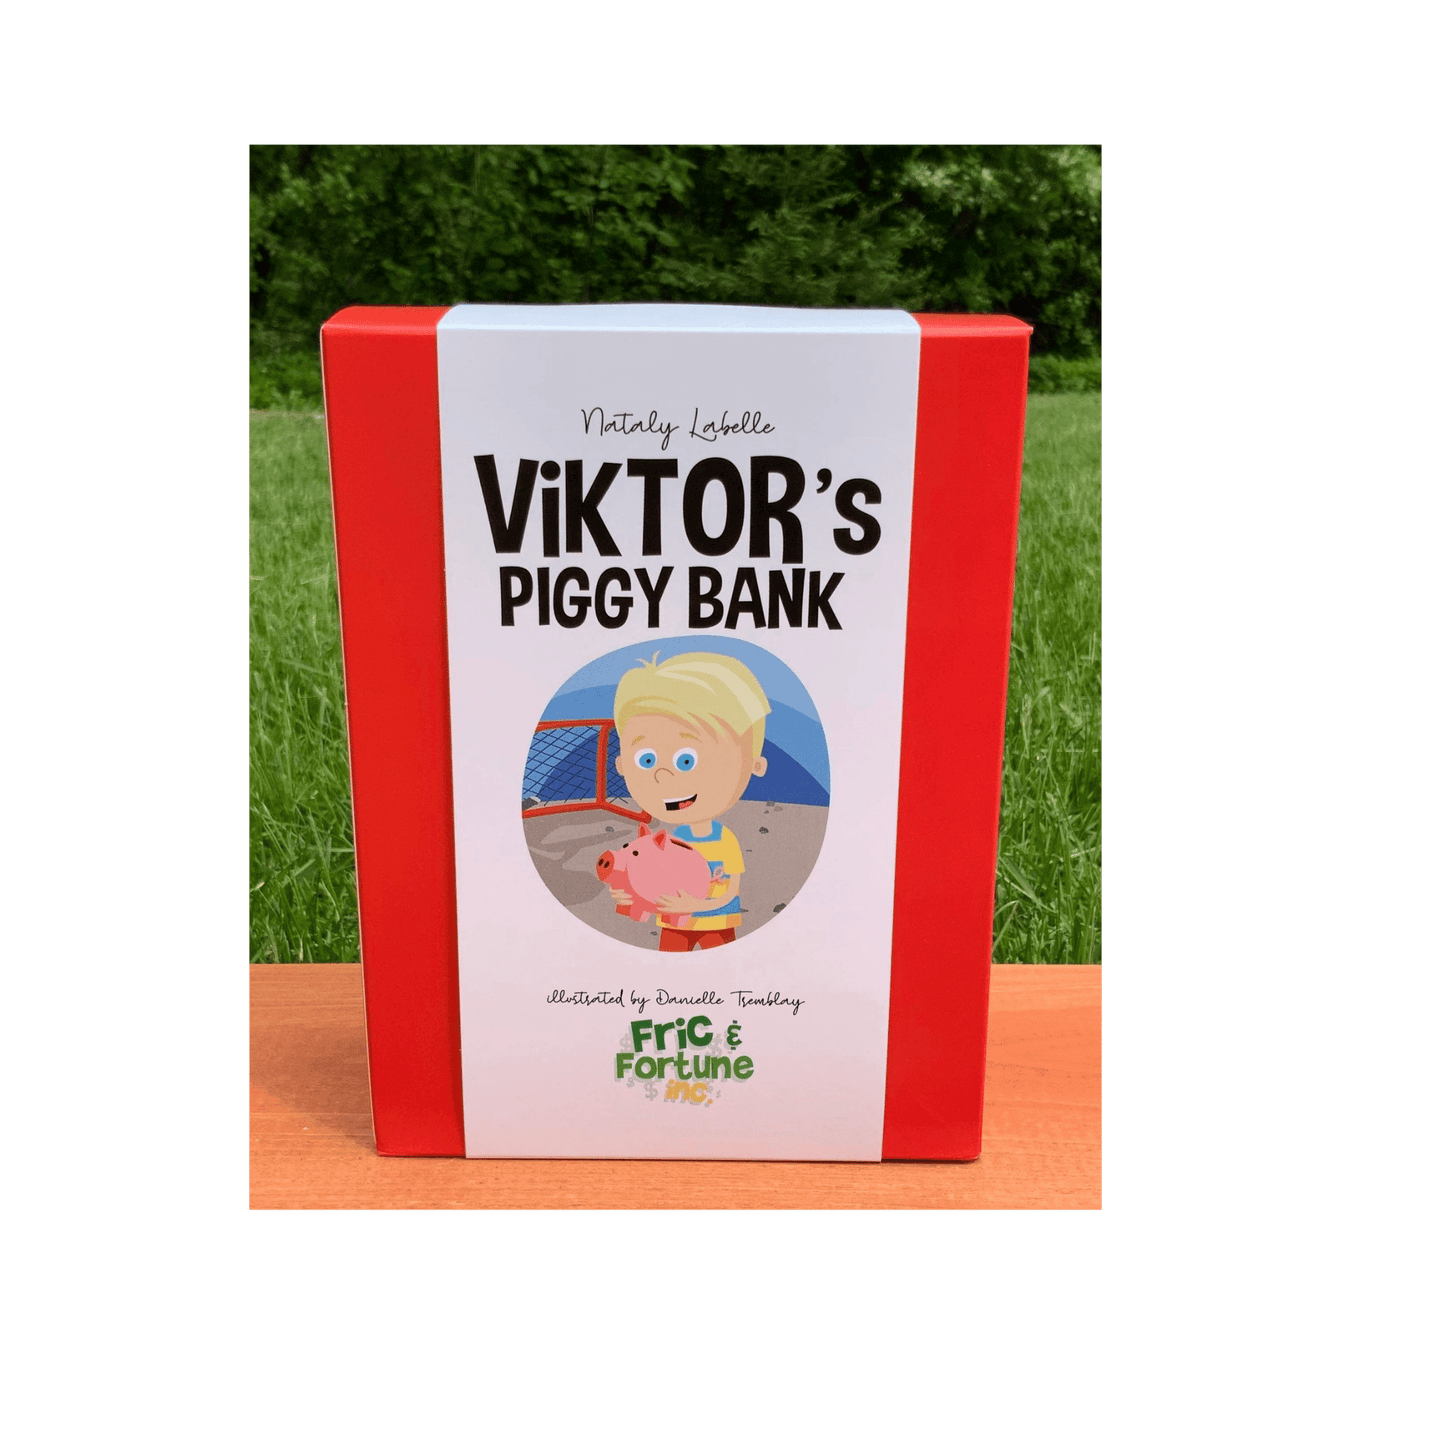 Viktor's piggy bank and book